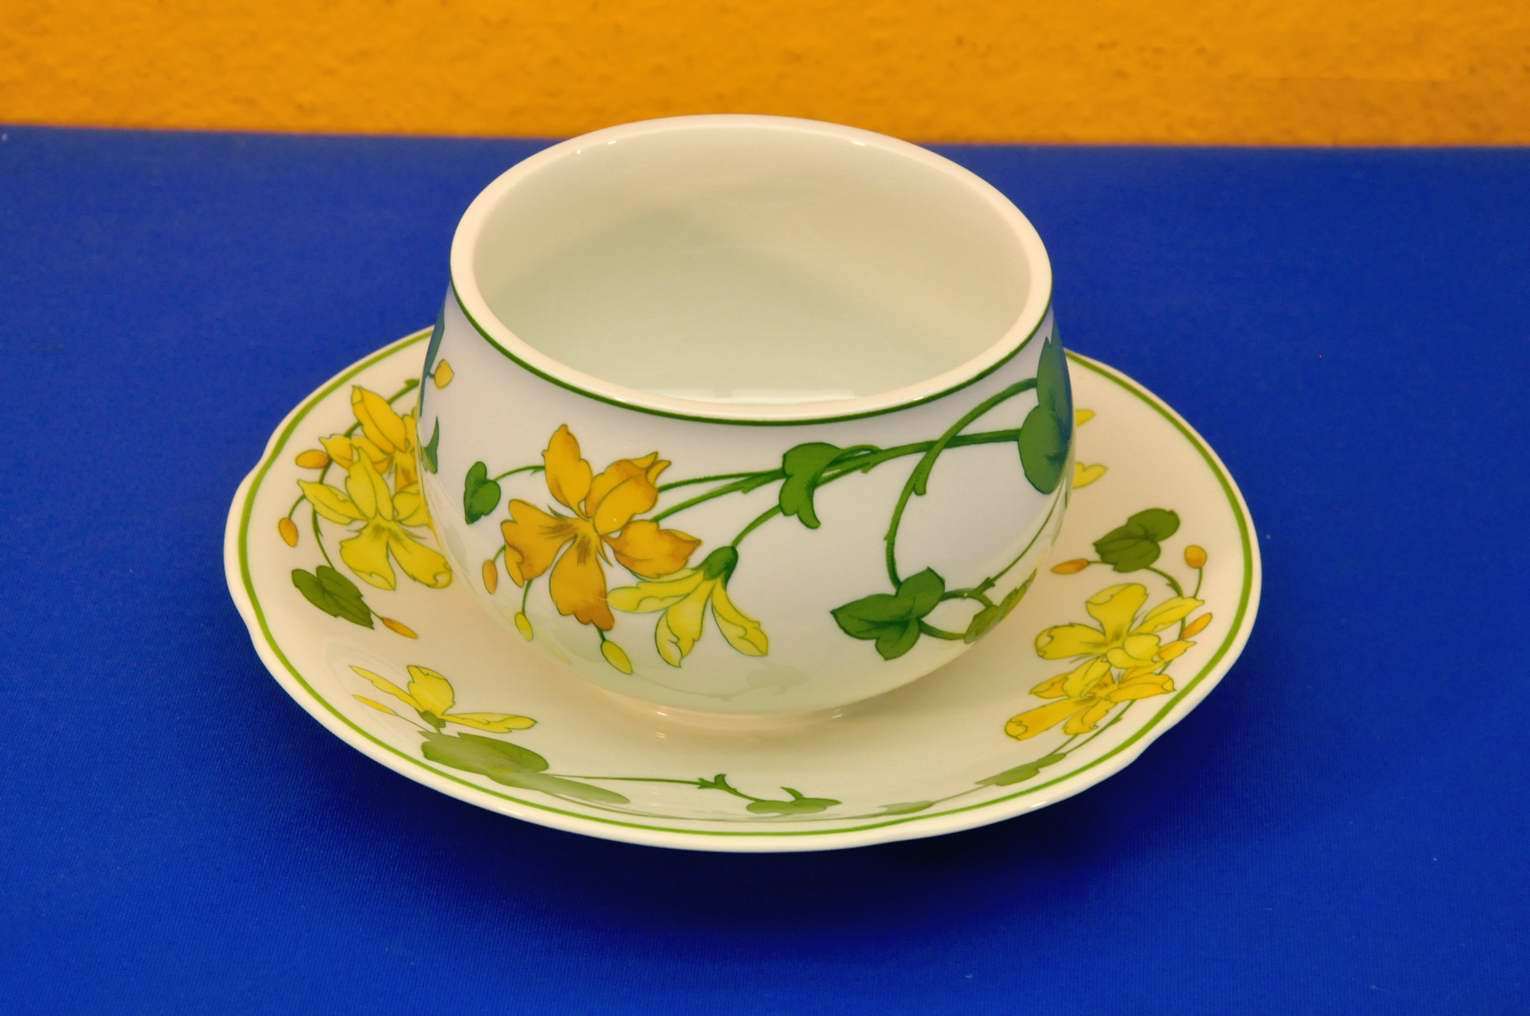 Unterteller Geranium VITRO gelbe Blüten Porzellan Villeroy & Boch Kaffeetasse u 